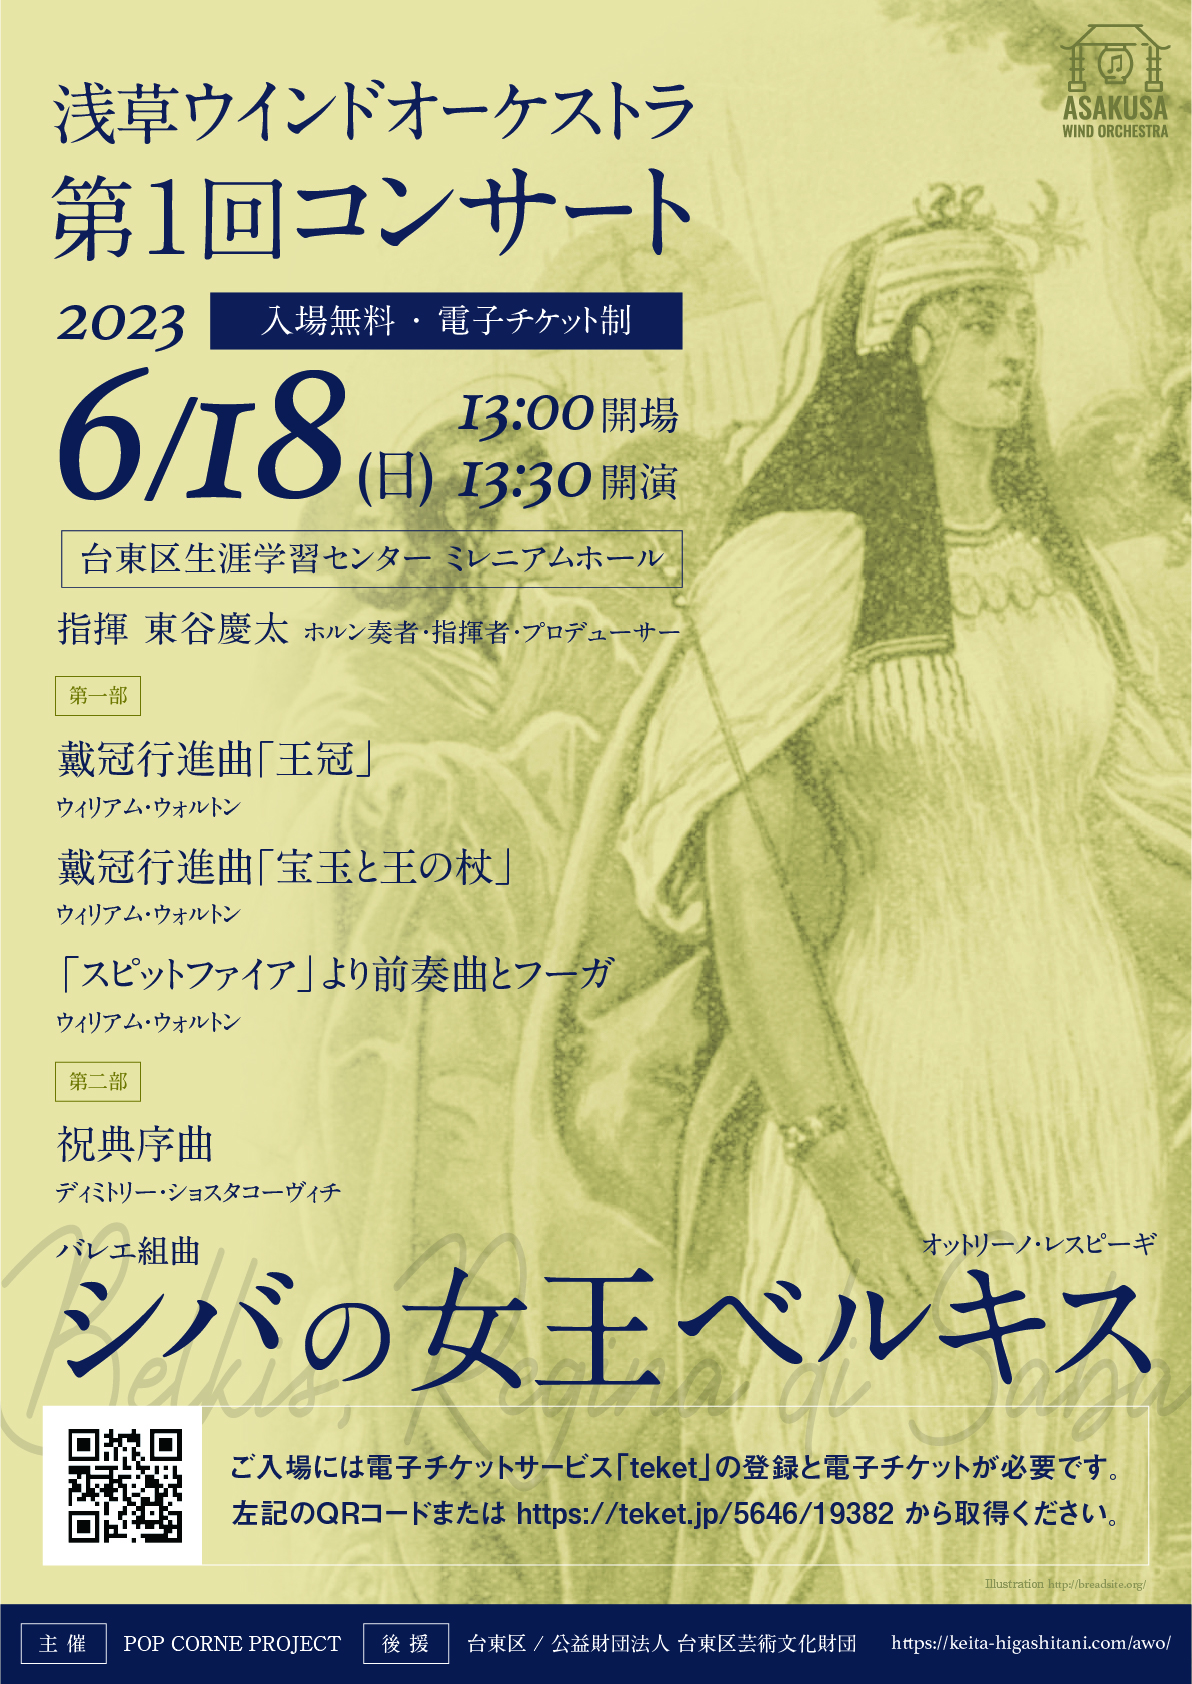 Asakusa Wind Orchestra 1st Concert